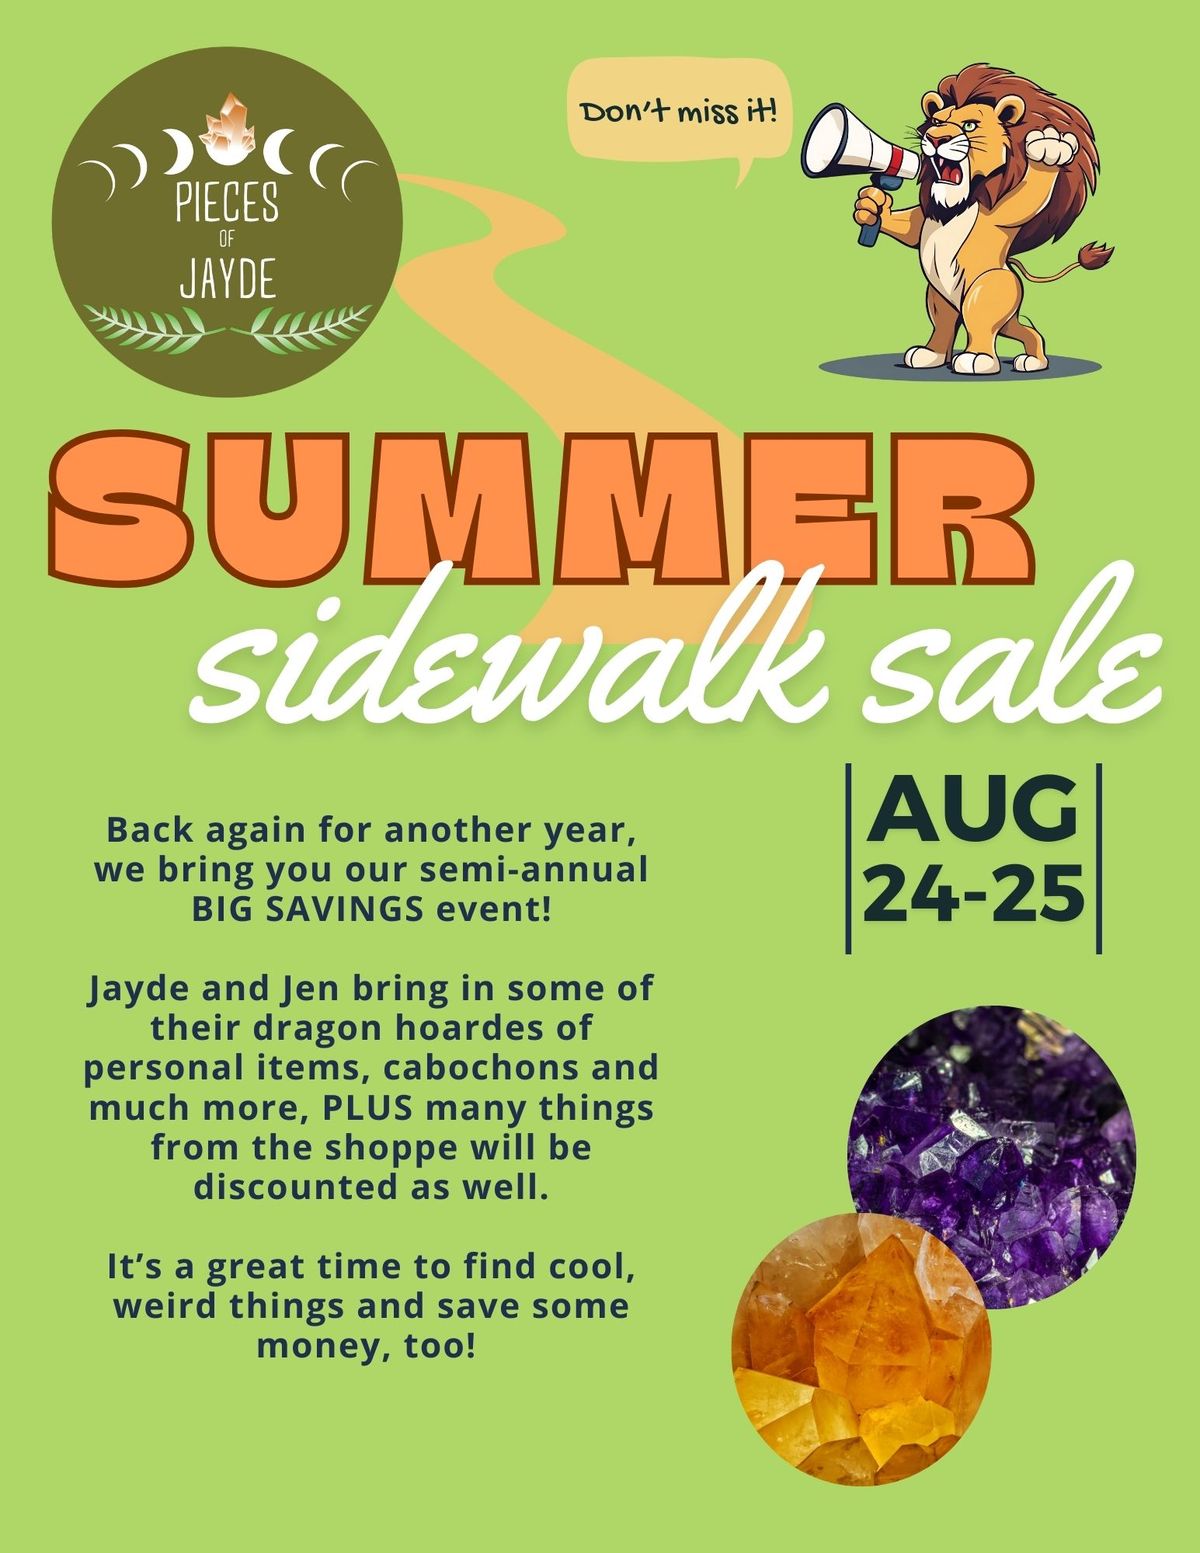 Summer Sidewalk Sale at Pieces of Jayde